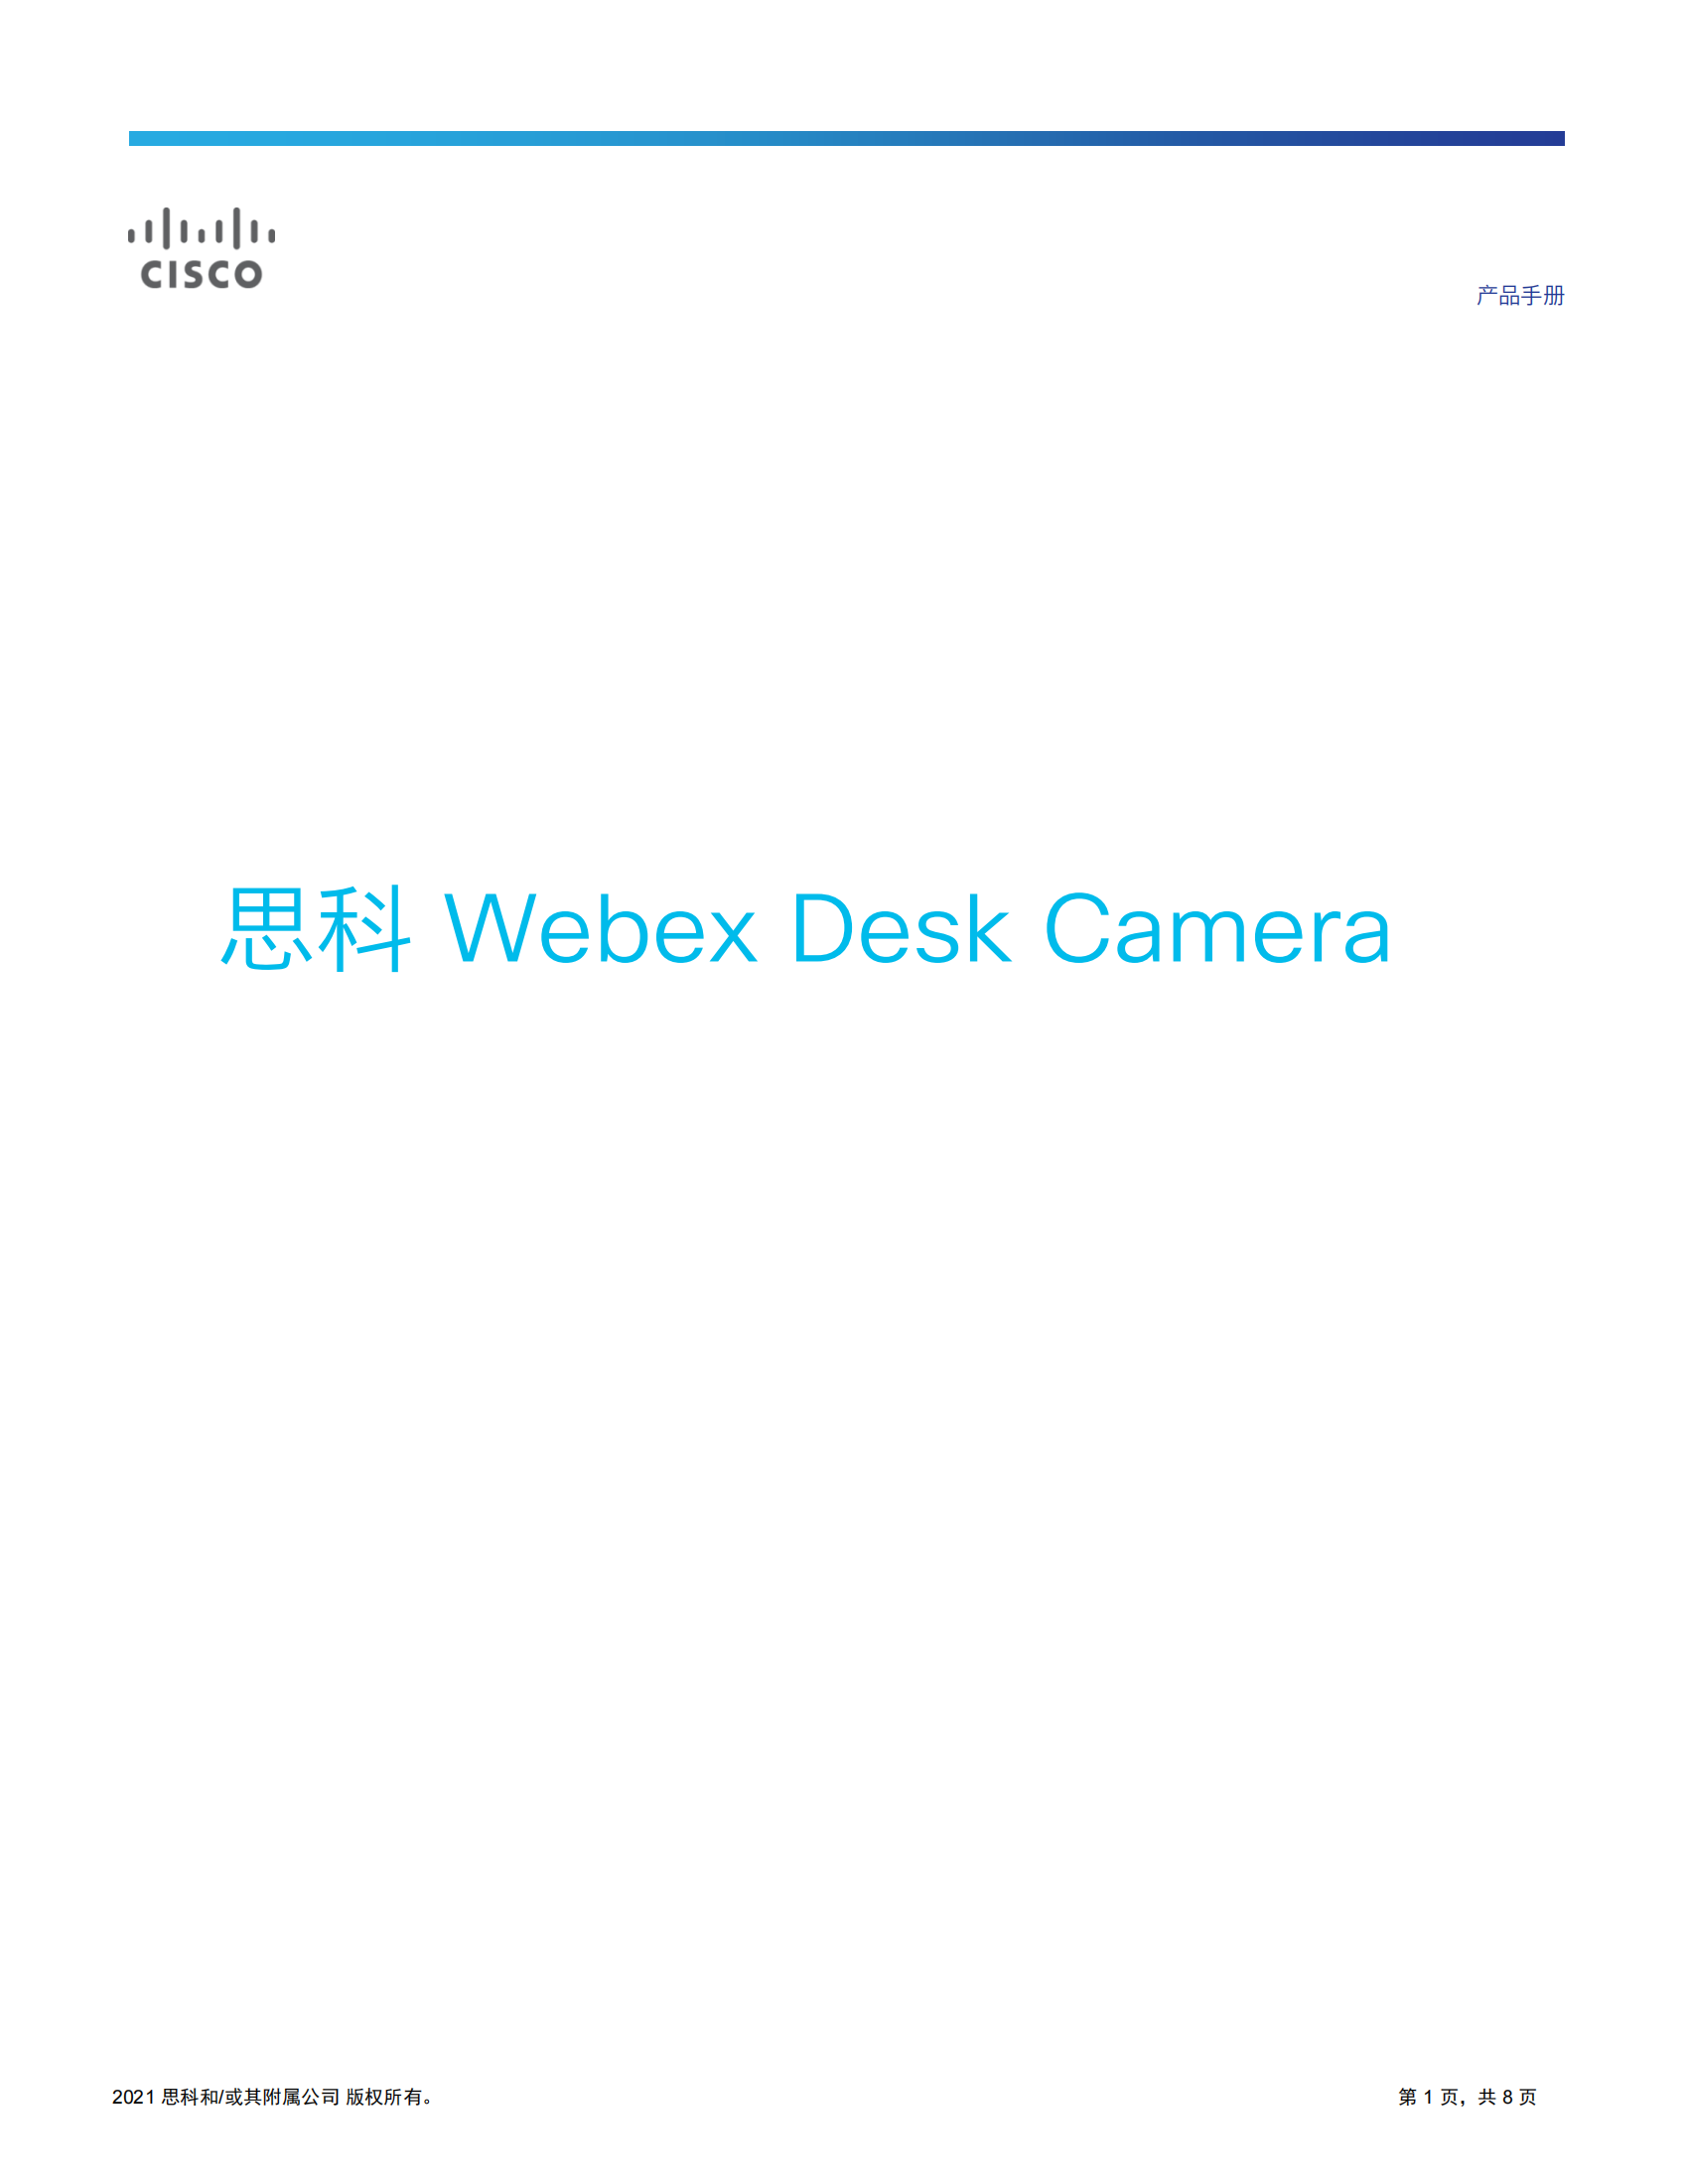 cisco-webex-desk-camera-data-sheet_00.png